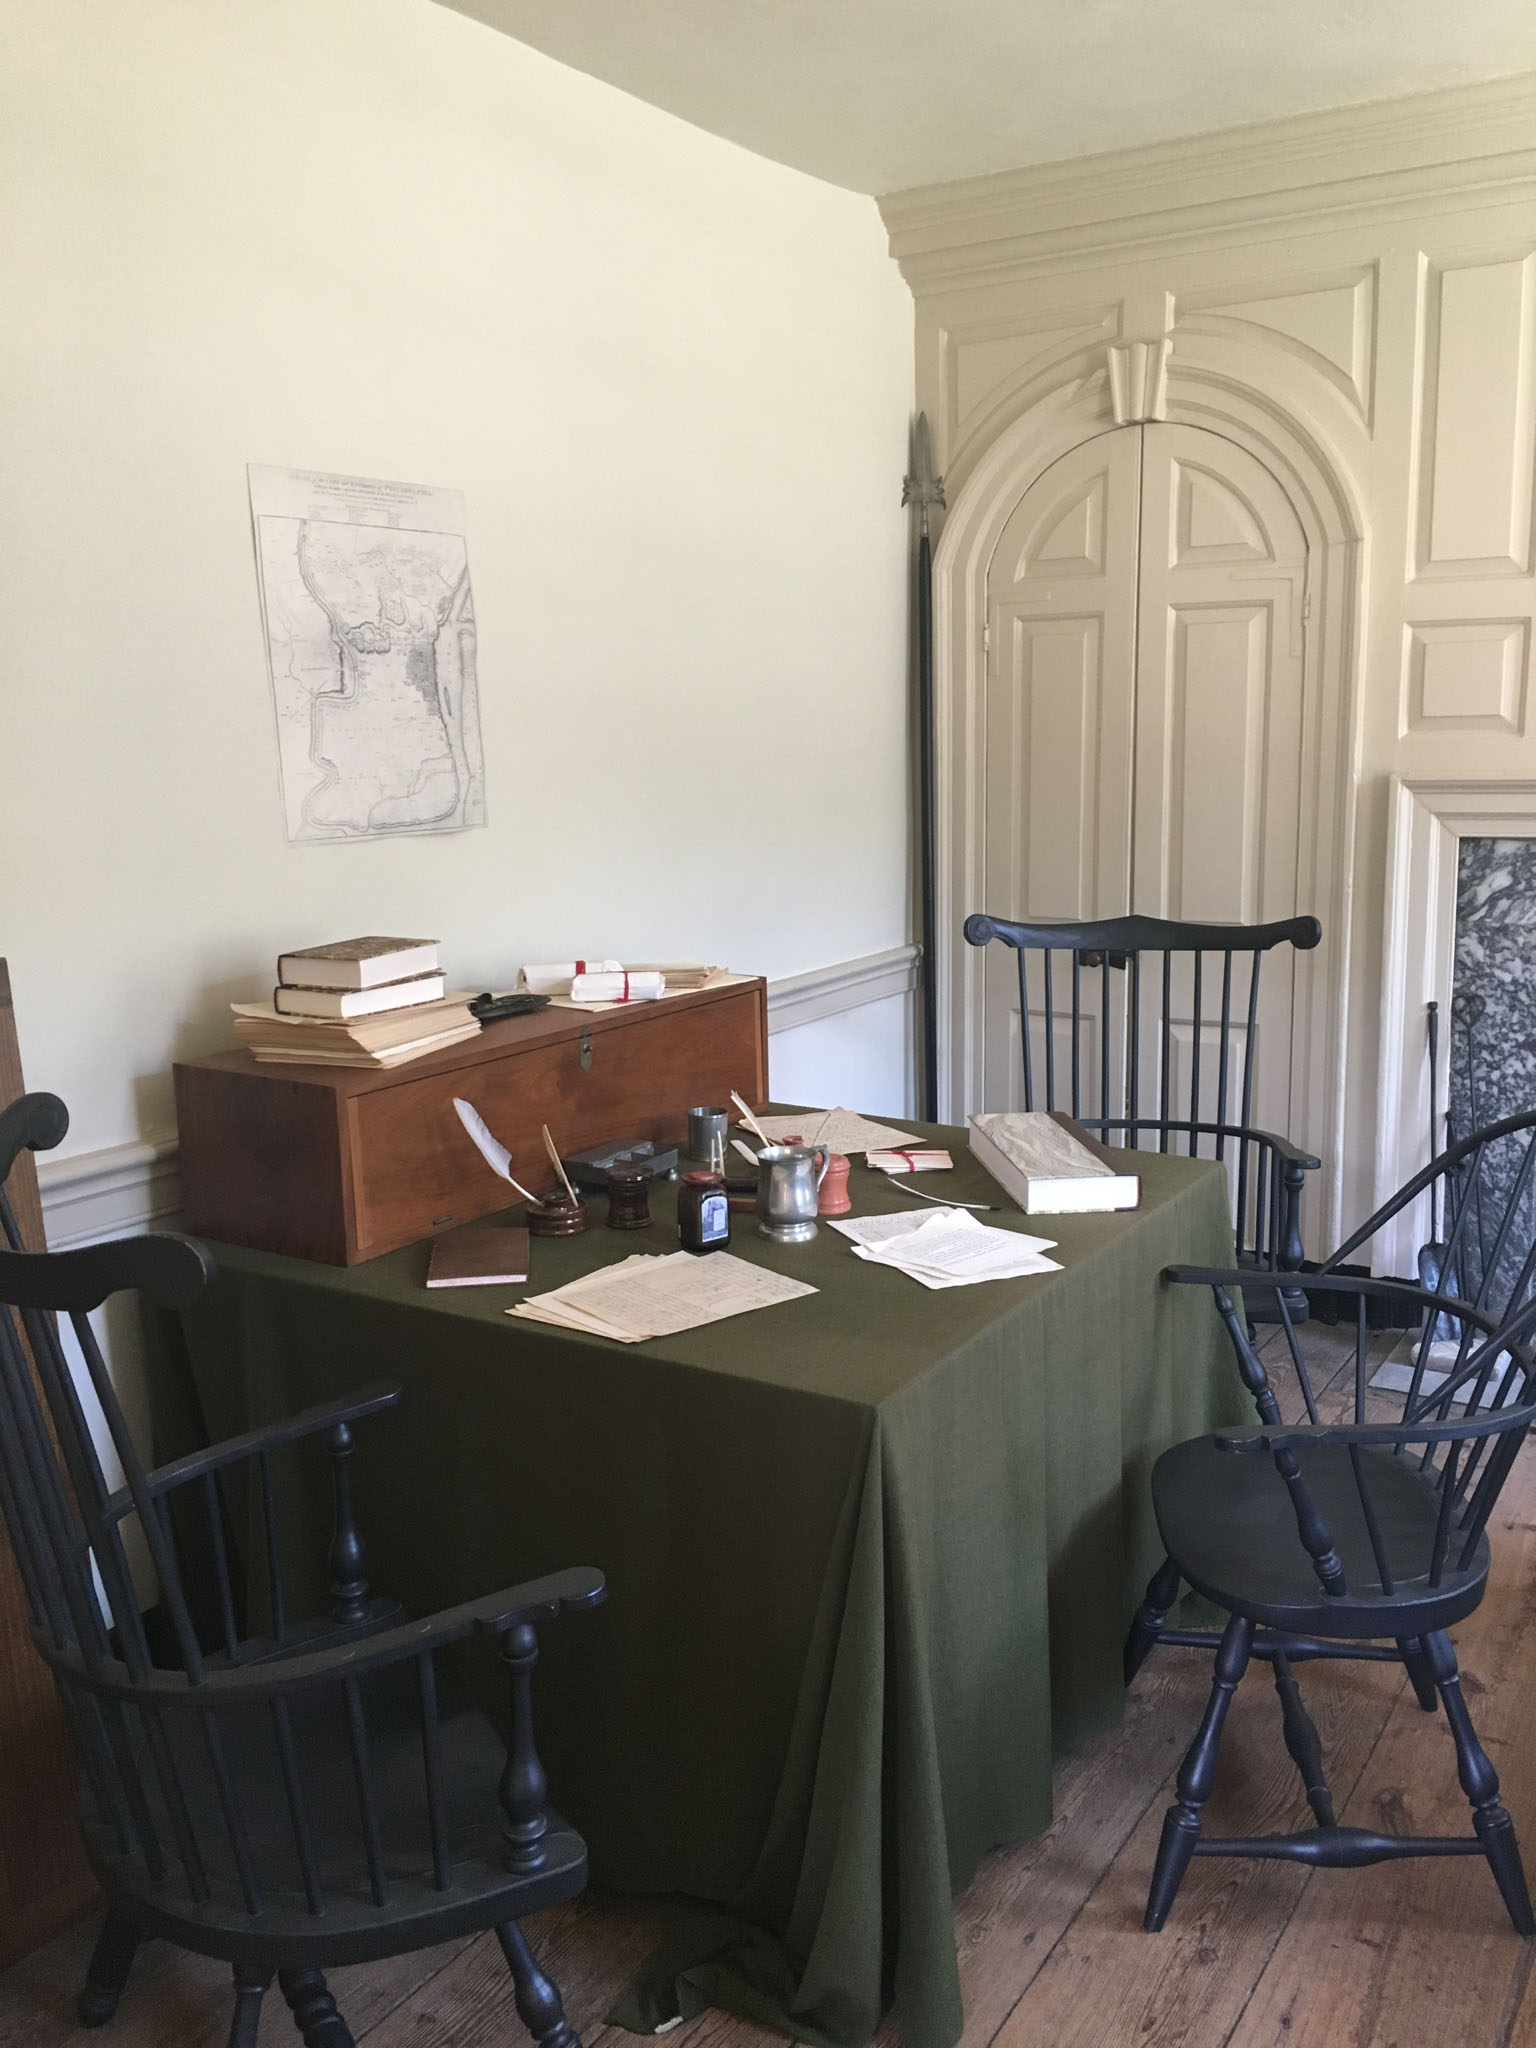  Alexander Hamilton's desk at Washington's Headquarters. 